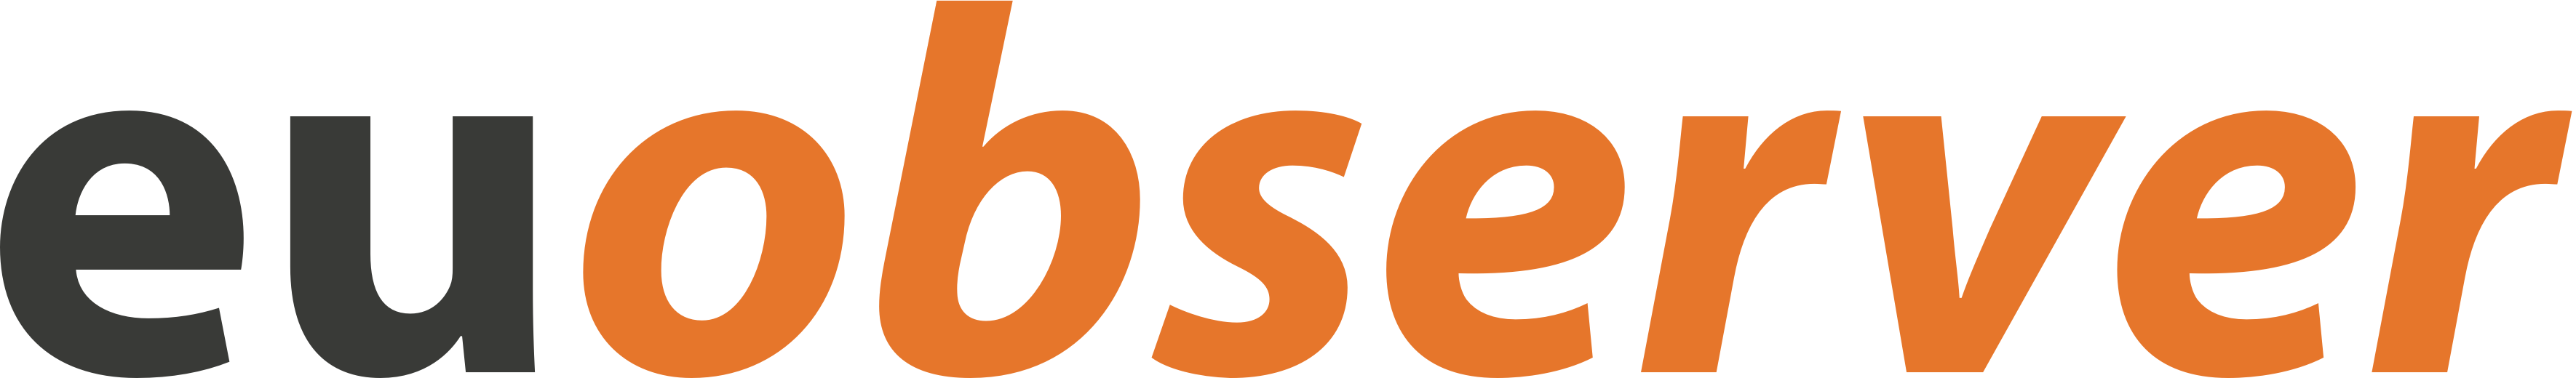 euobs positiv orange